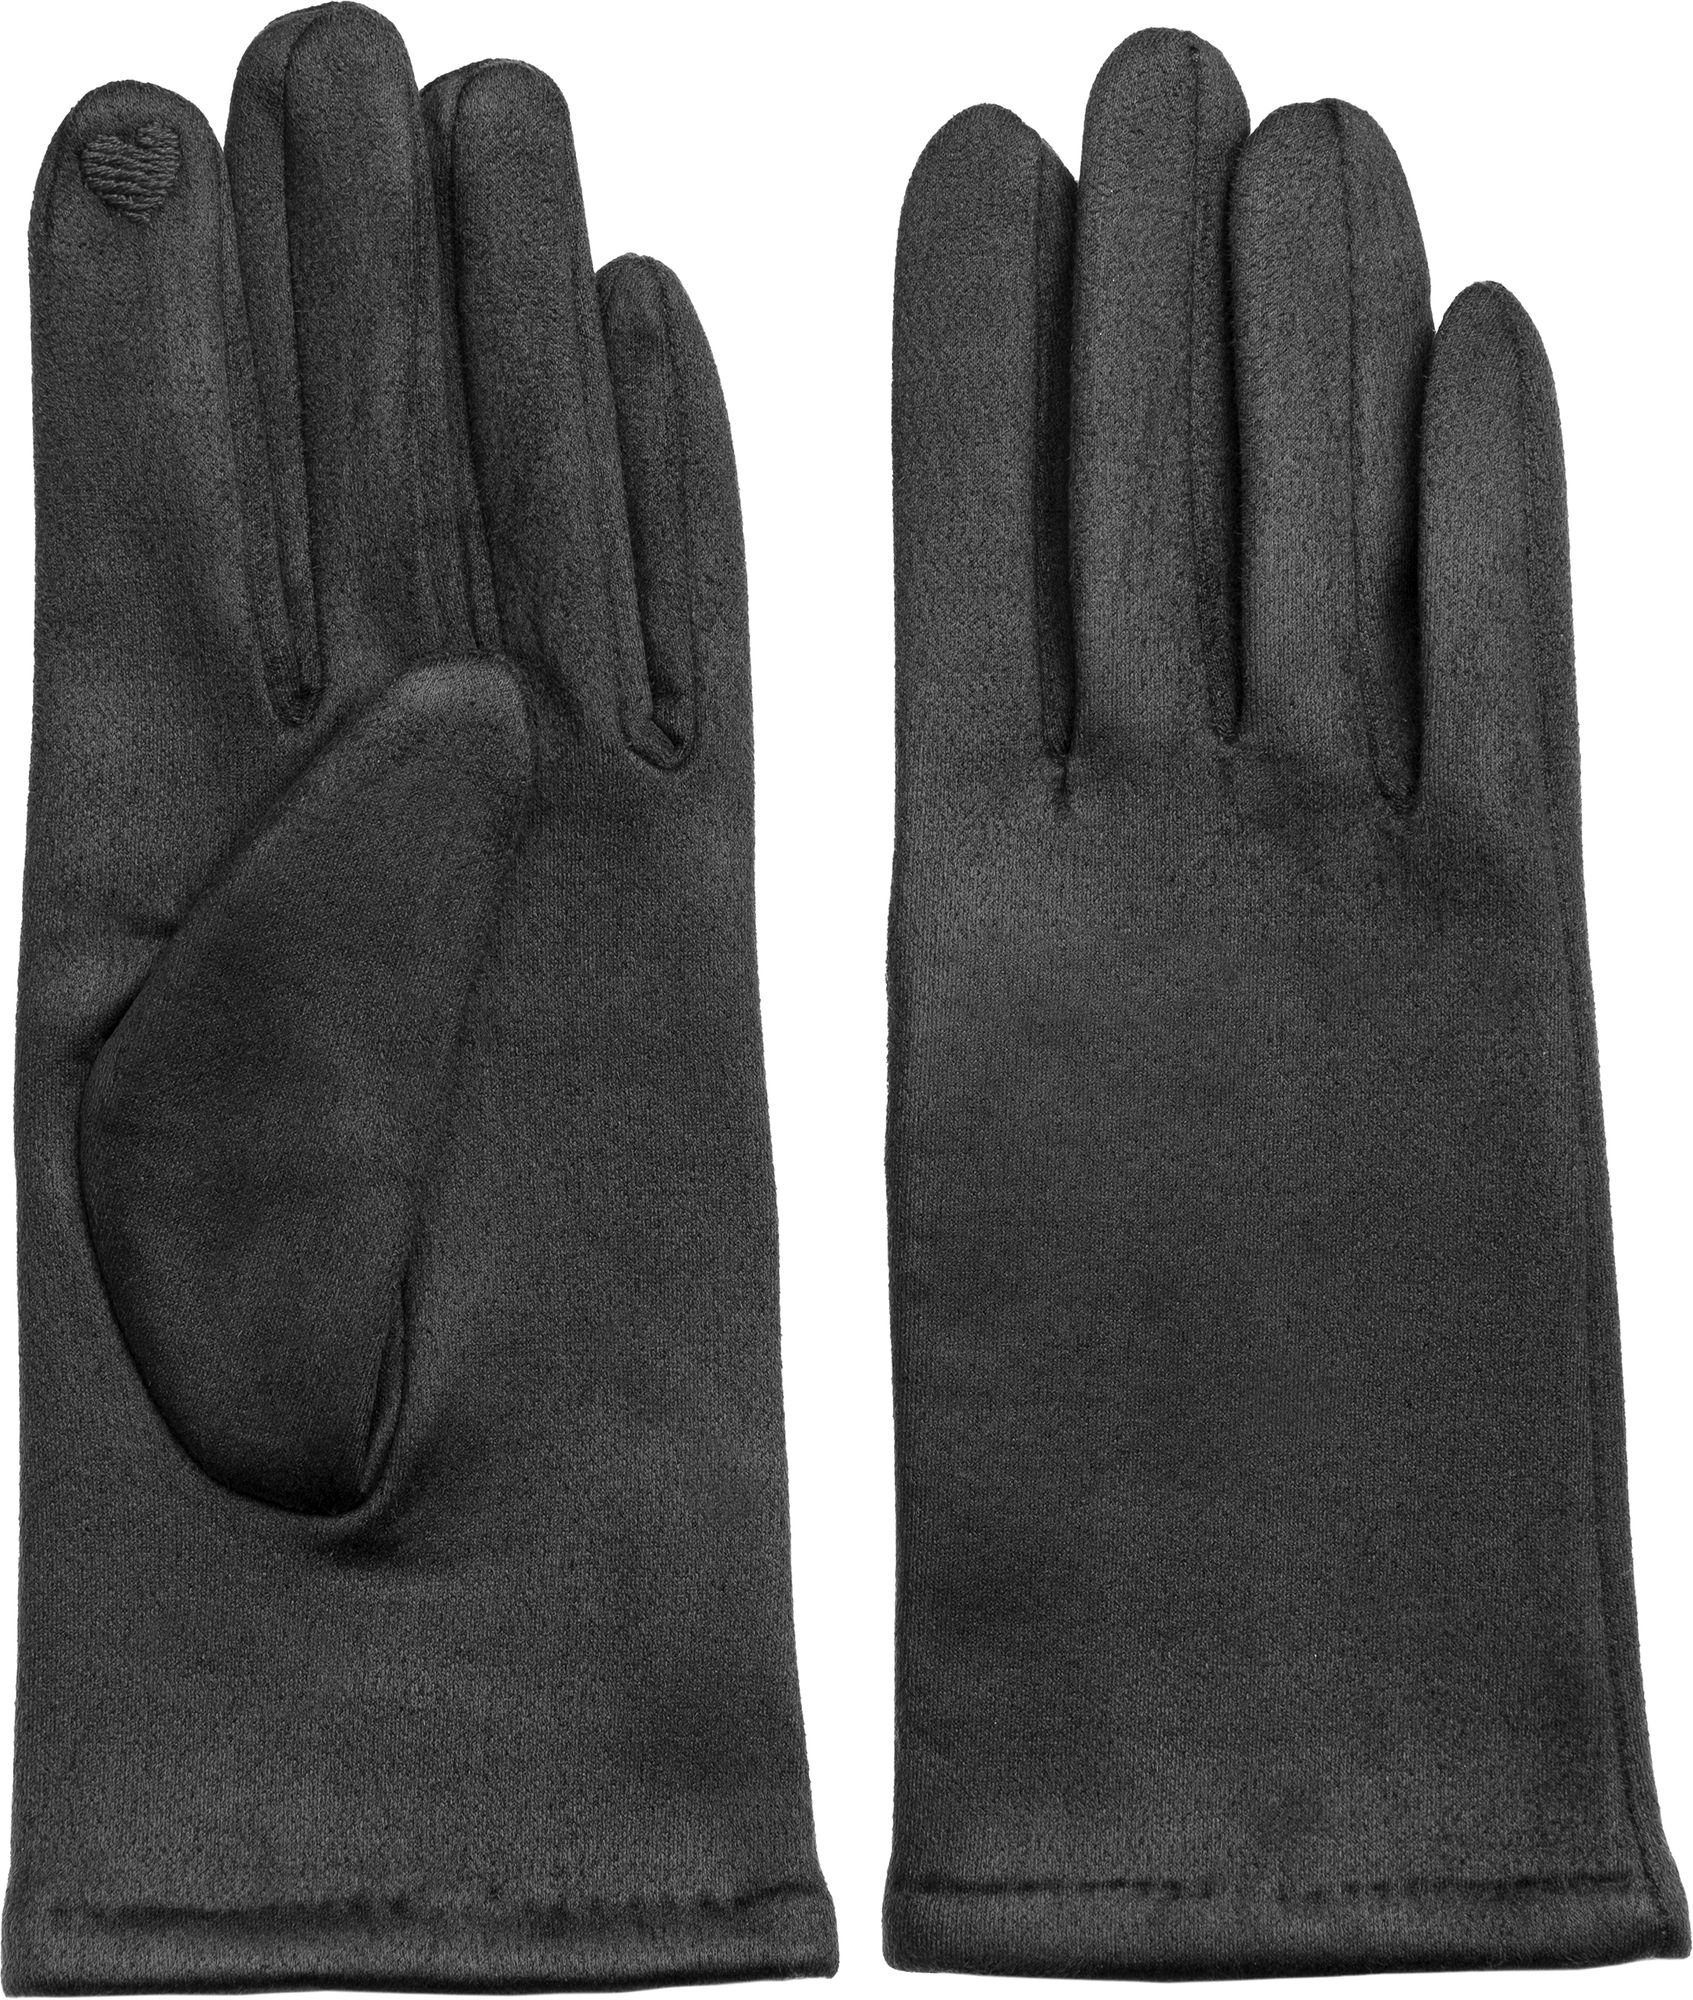 Caspar Strickhandschuhe GLV013 klassisch elegante uni Damen Winter Handschuhe dunkelgrau